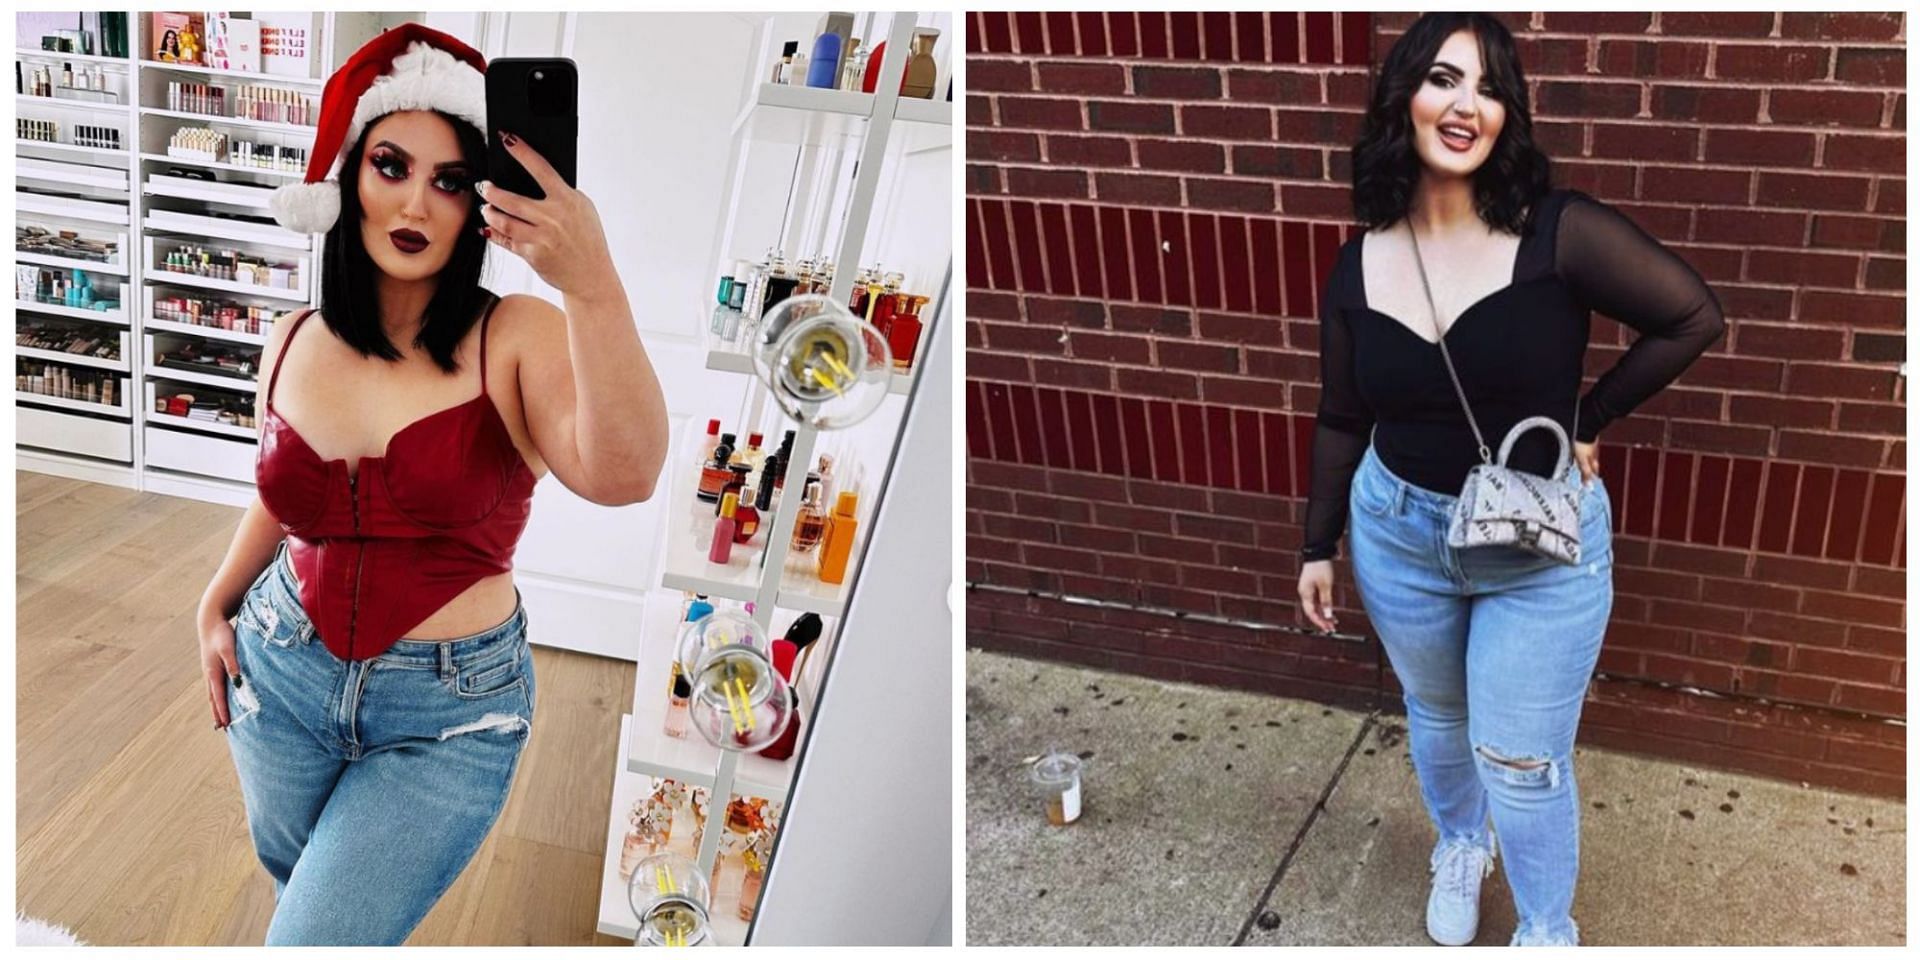 Mikayla Nogueira opened up about her struggles, social media break and her comeback in late November. (Image via Instagram)